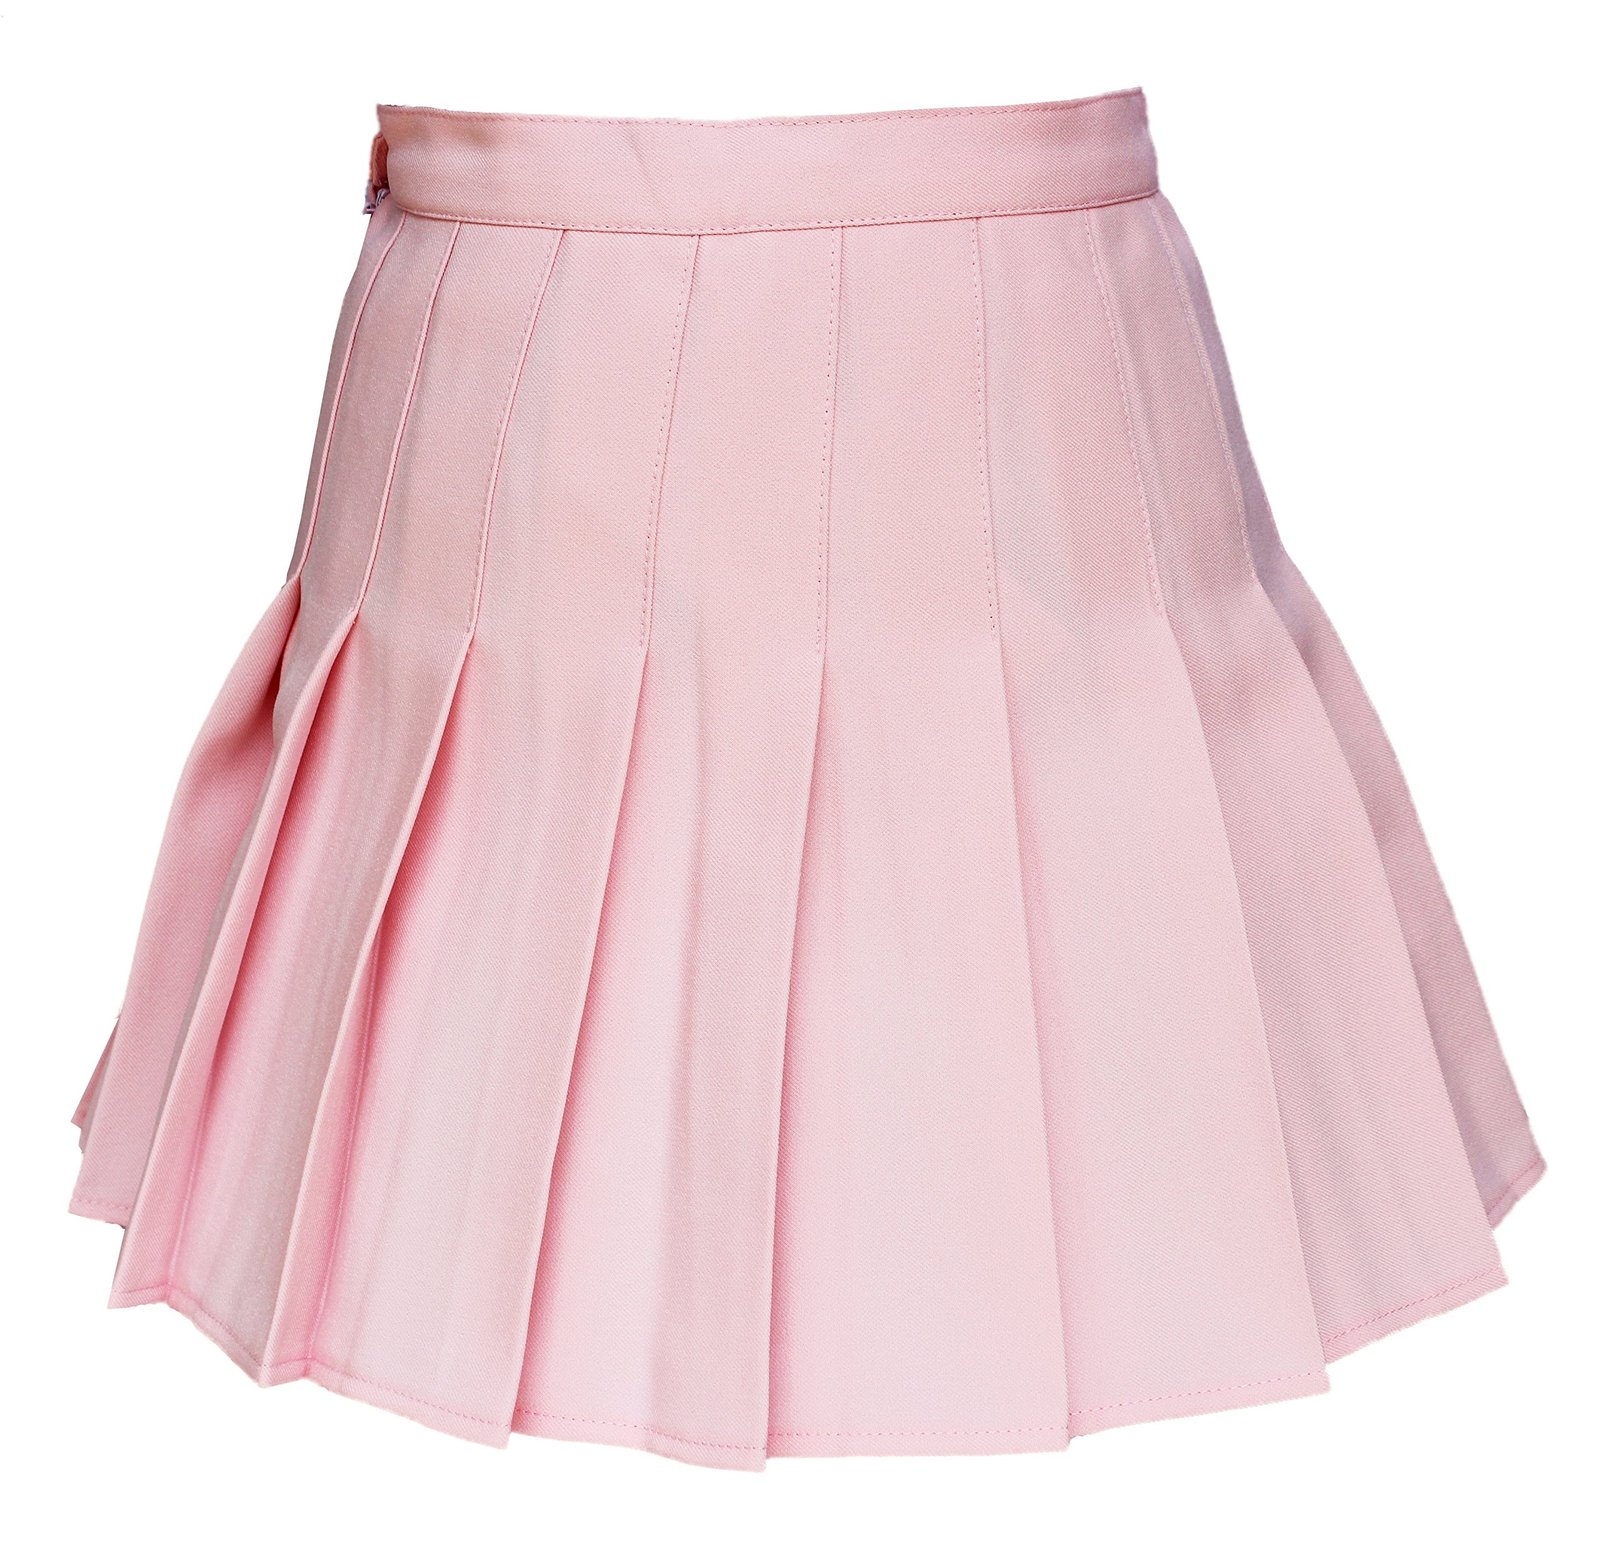 Beautifulfashionlife Women's High Waist Solid Pleated Mini Skirt(M , Pink)